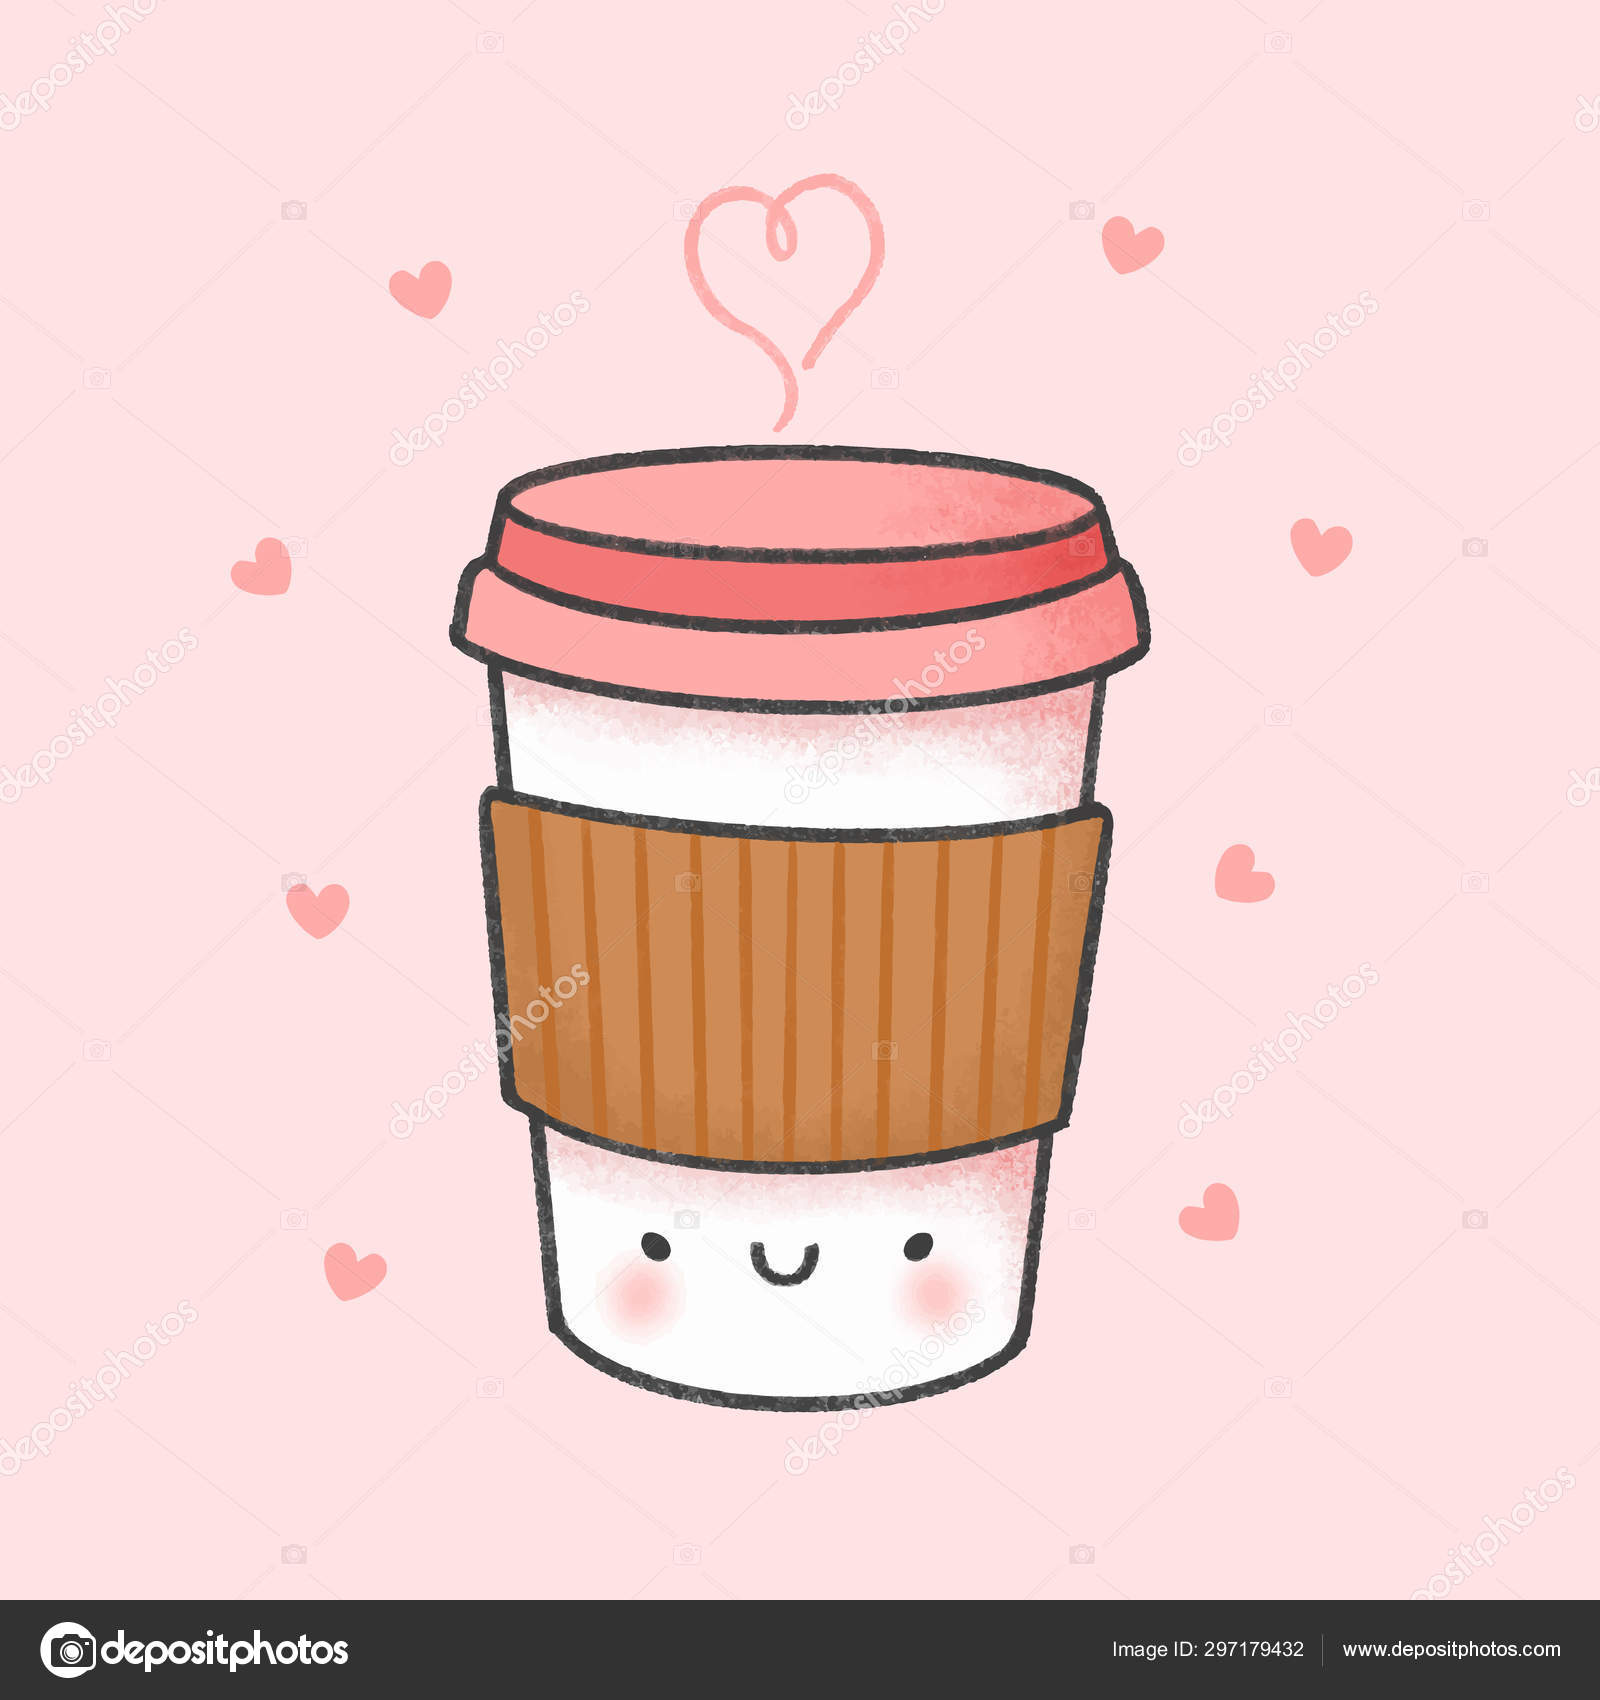 https://st4.depositphotos.com/24595320/29717/v/1600/depositphotos_297179432-stock-illustration-cup-coffee-hand-drawn-cartoon.jpg